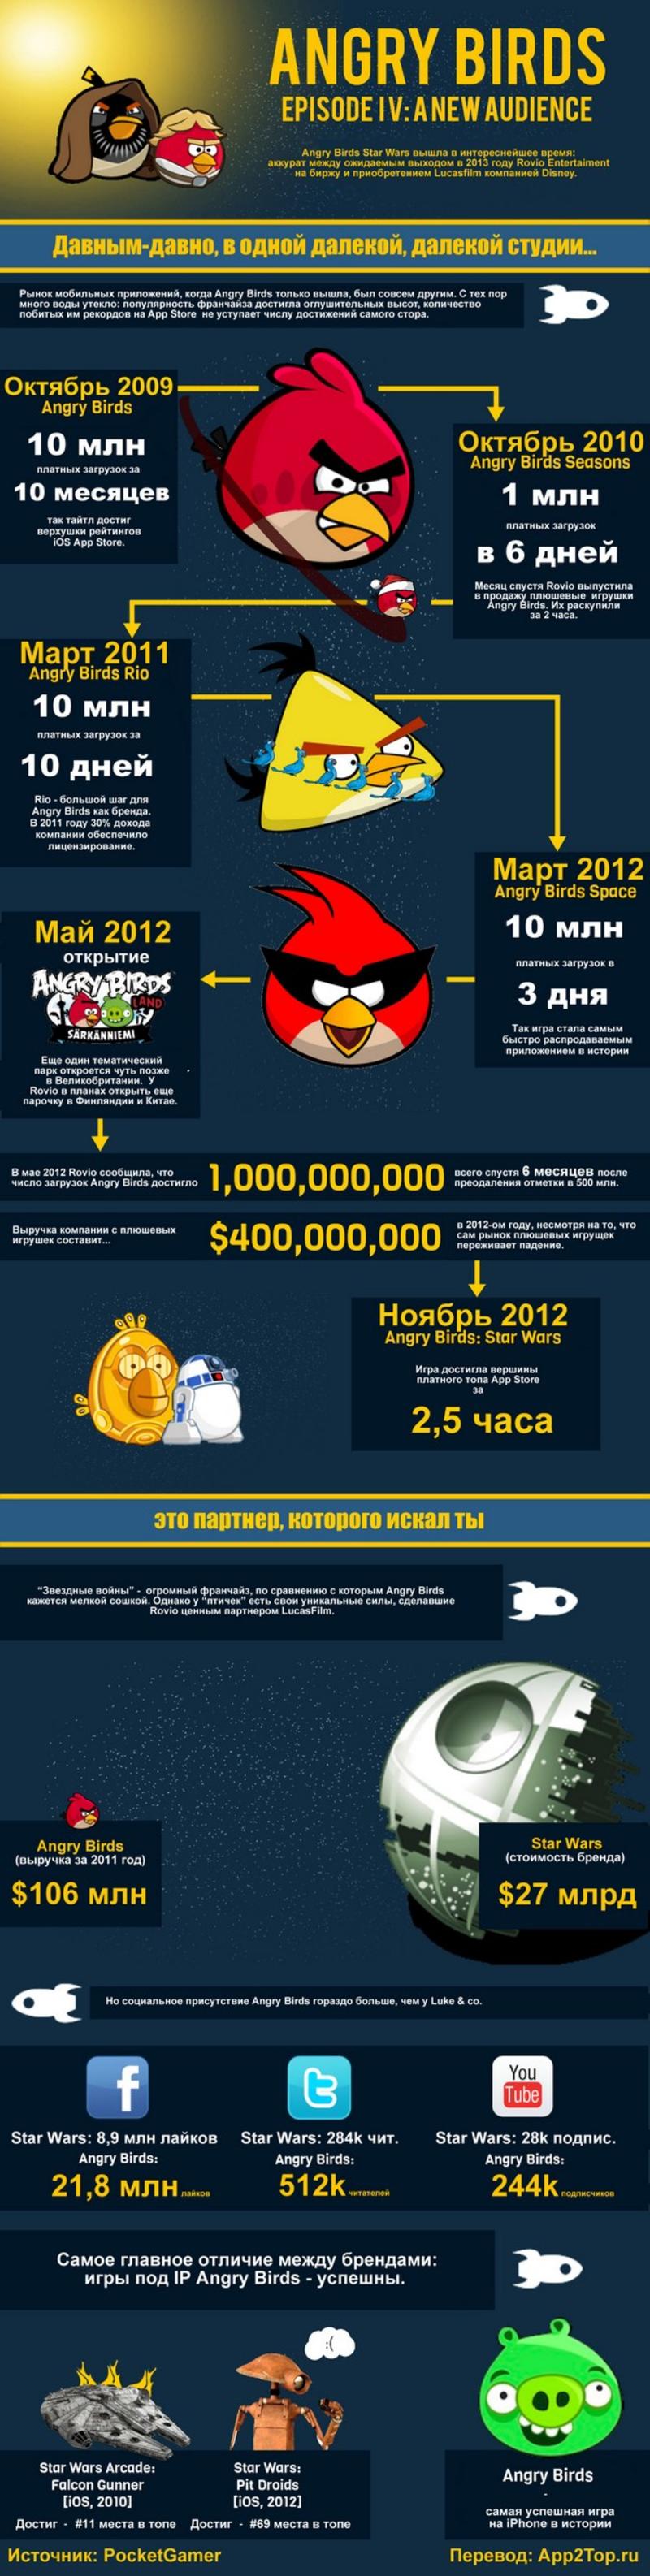 Angry Birds Star Wars II: Темная сторона Силы победила / App2top.ru